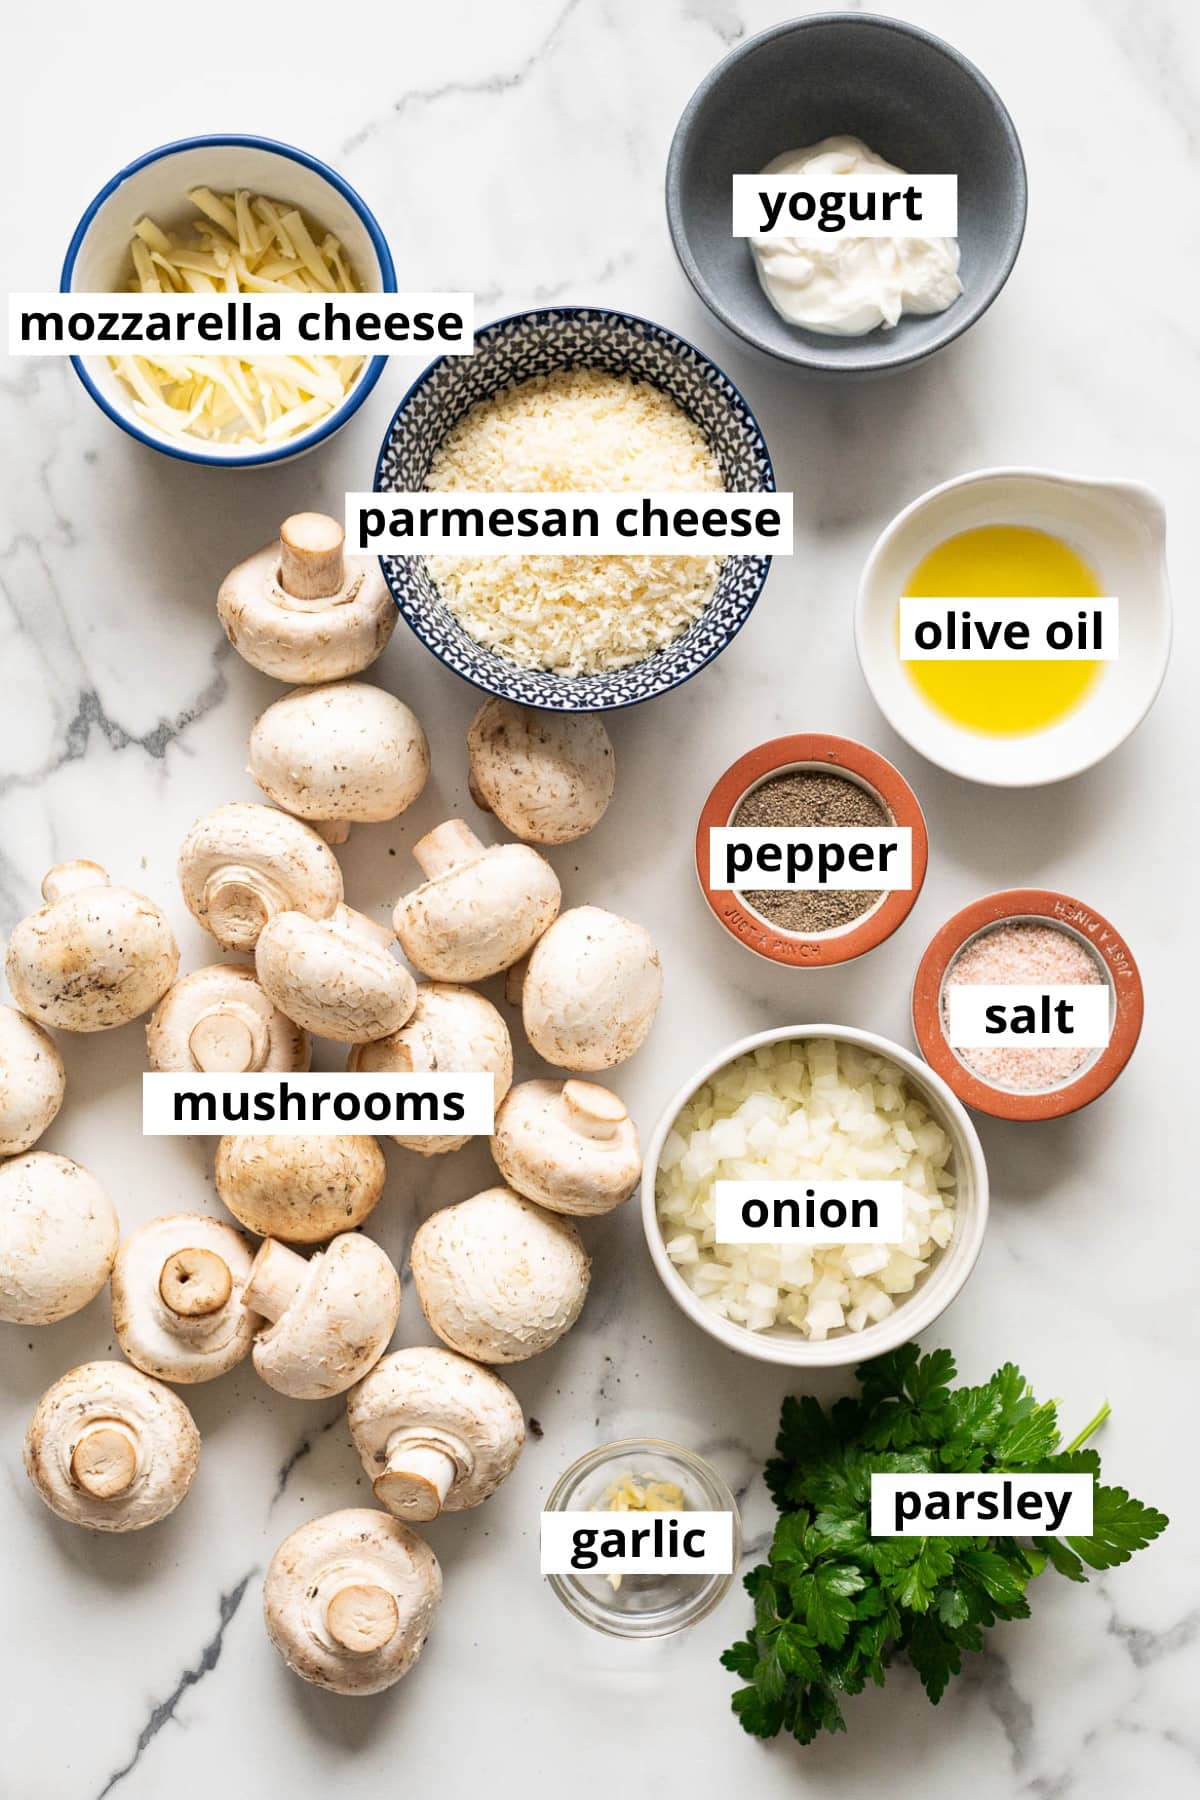 Mushrooms, mozzarella cheese, parmesan cheese, yogurt, olive oil, onion, garlic, parsley, salt and pepper.